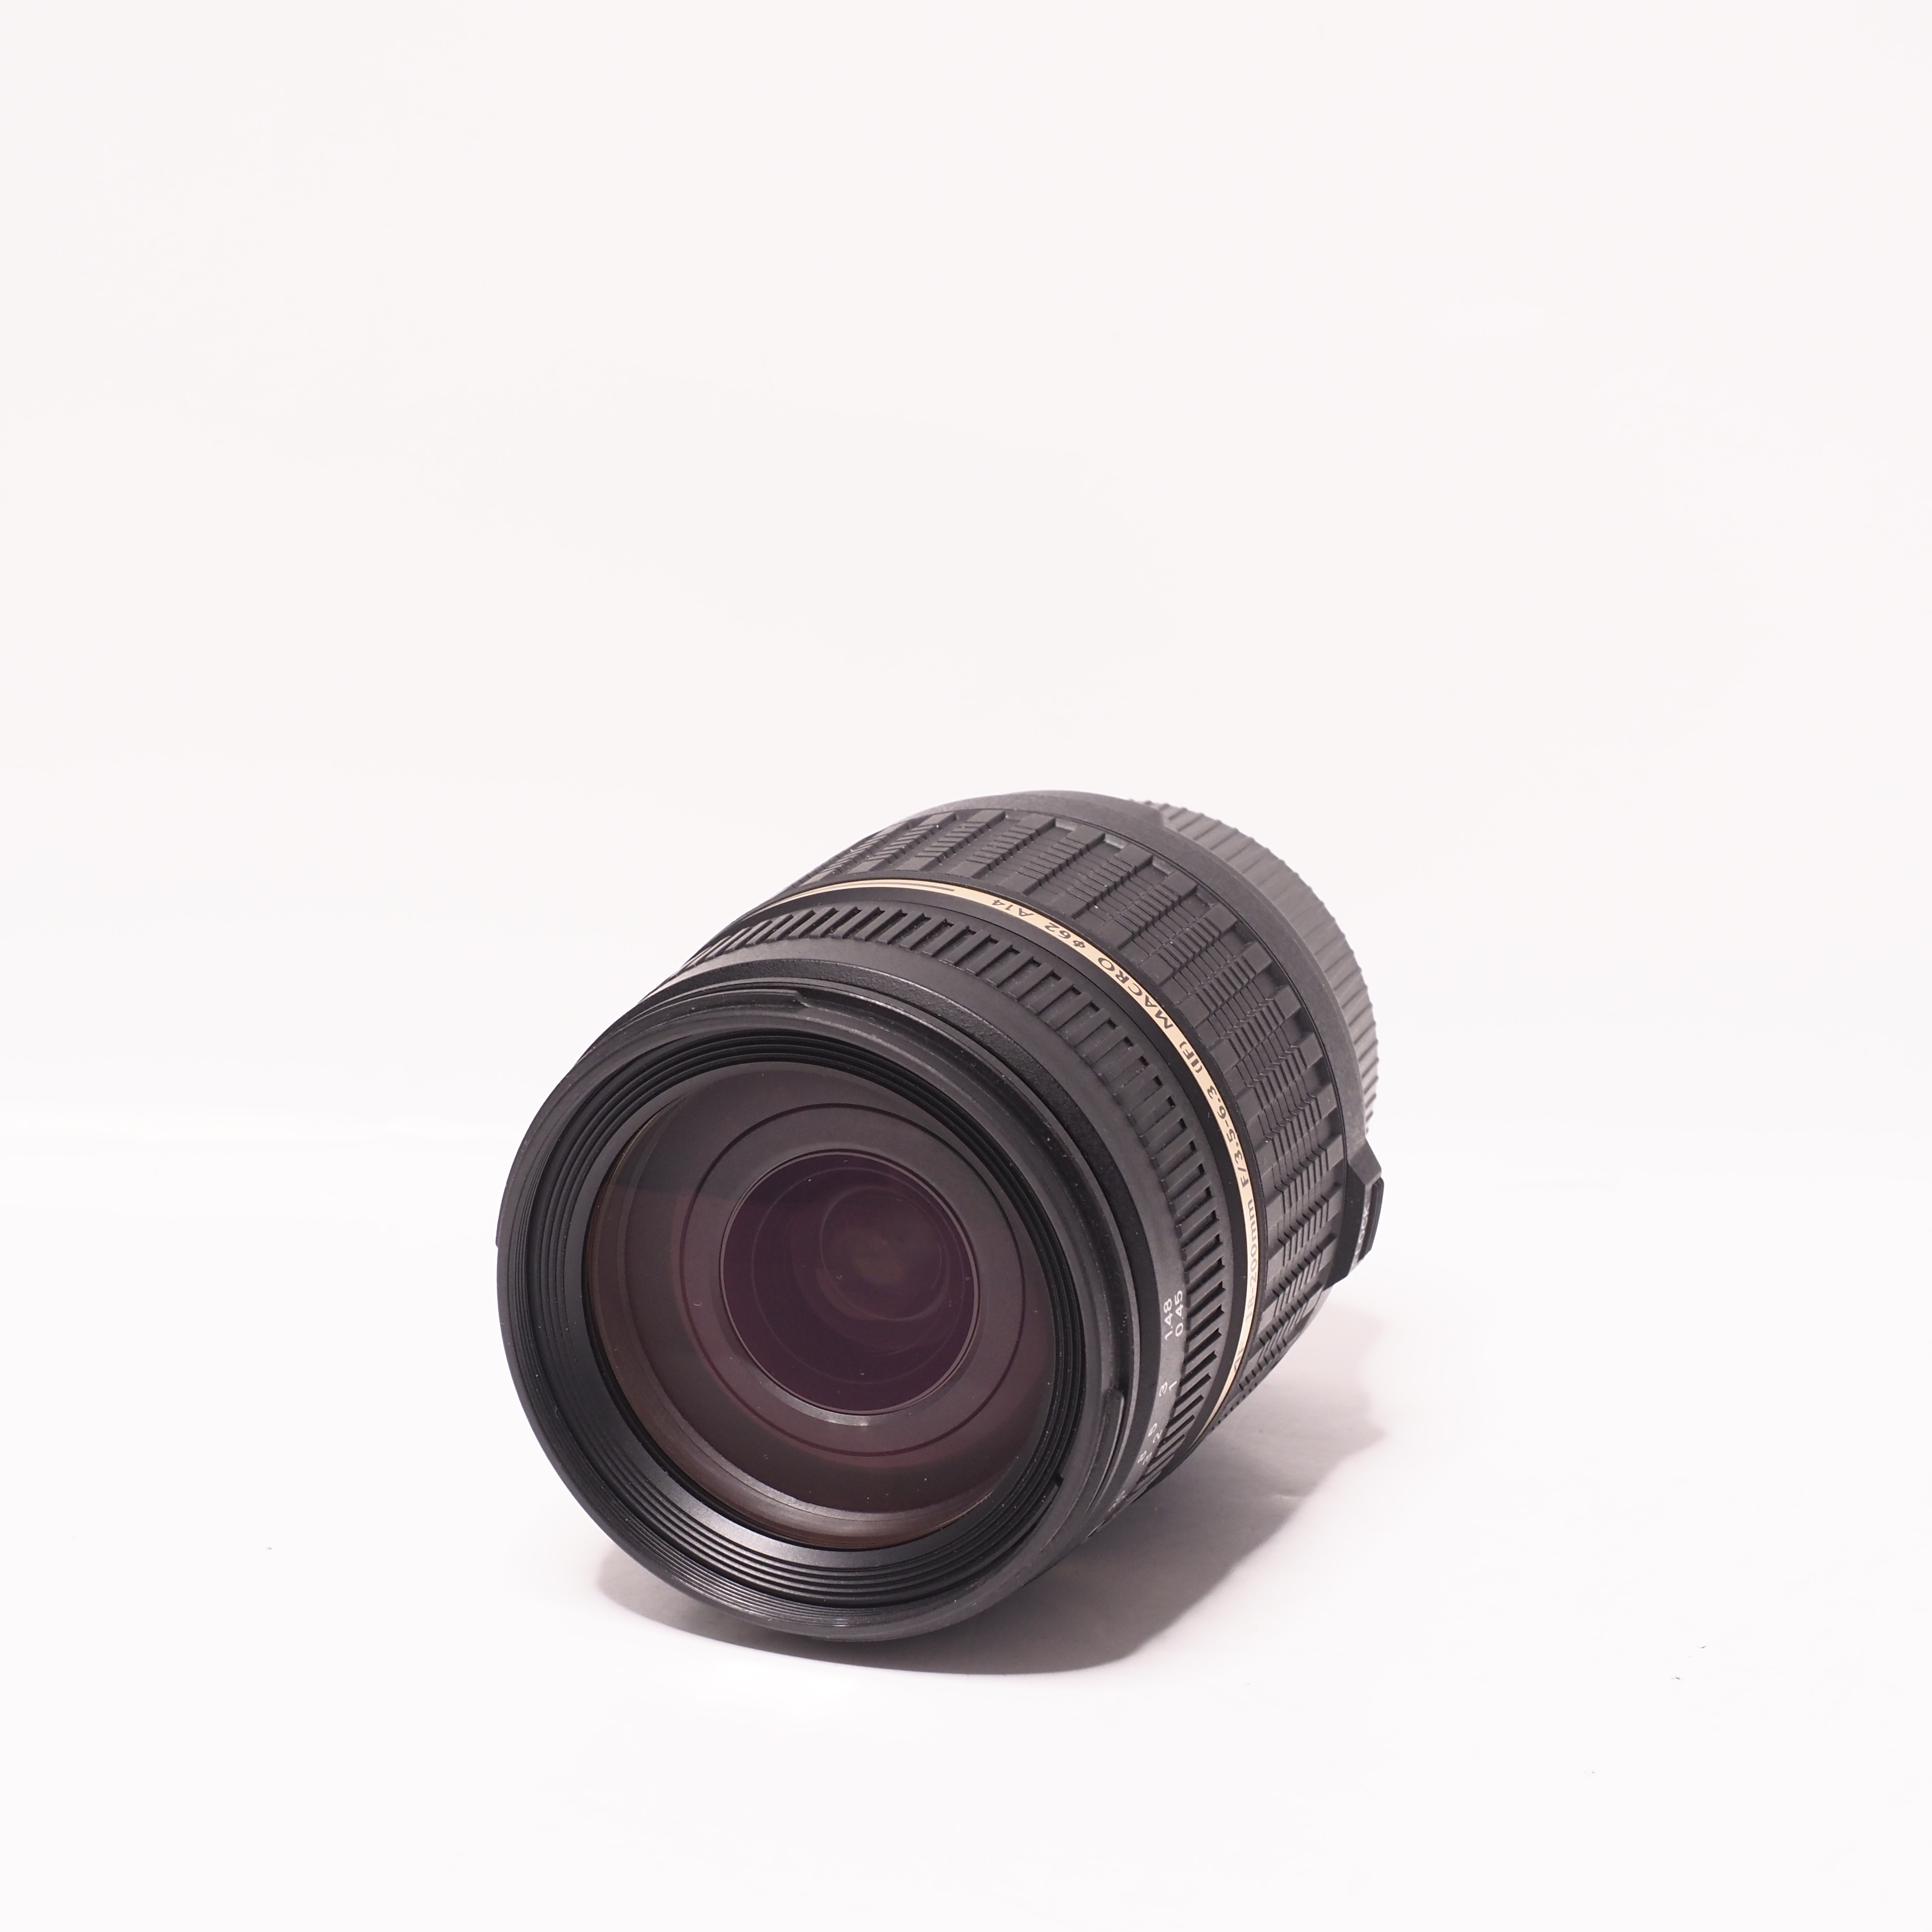 Tamron 18-200mm f/3,5-6,3 Di II för Nikon - Begagnad